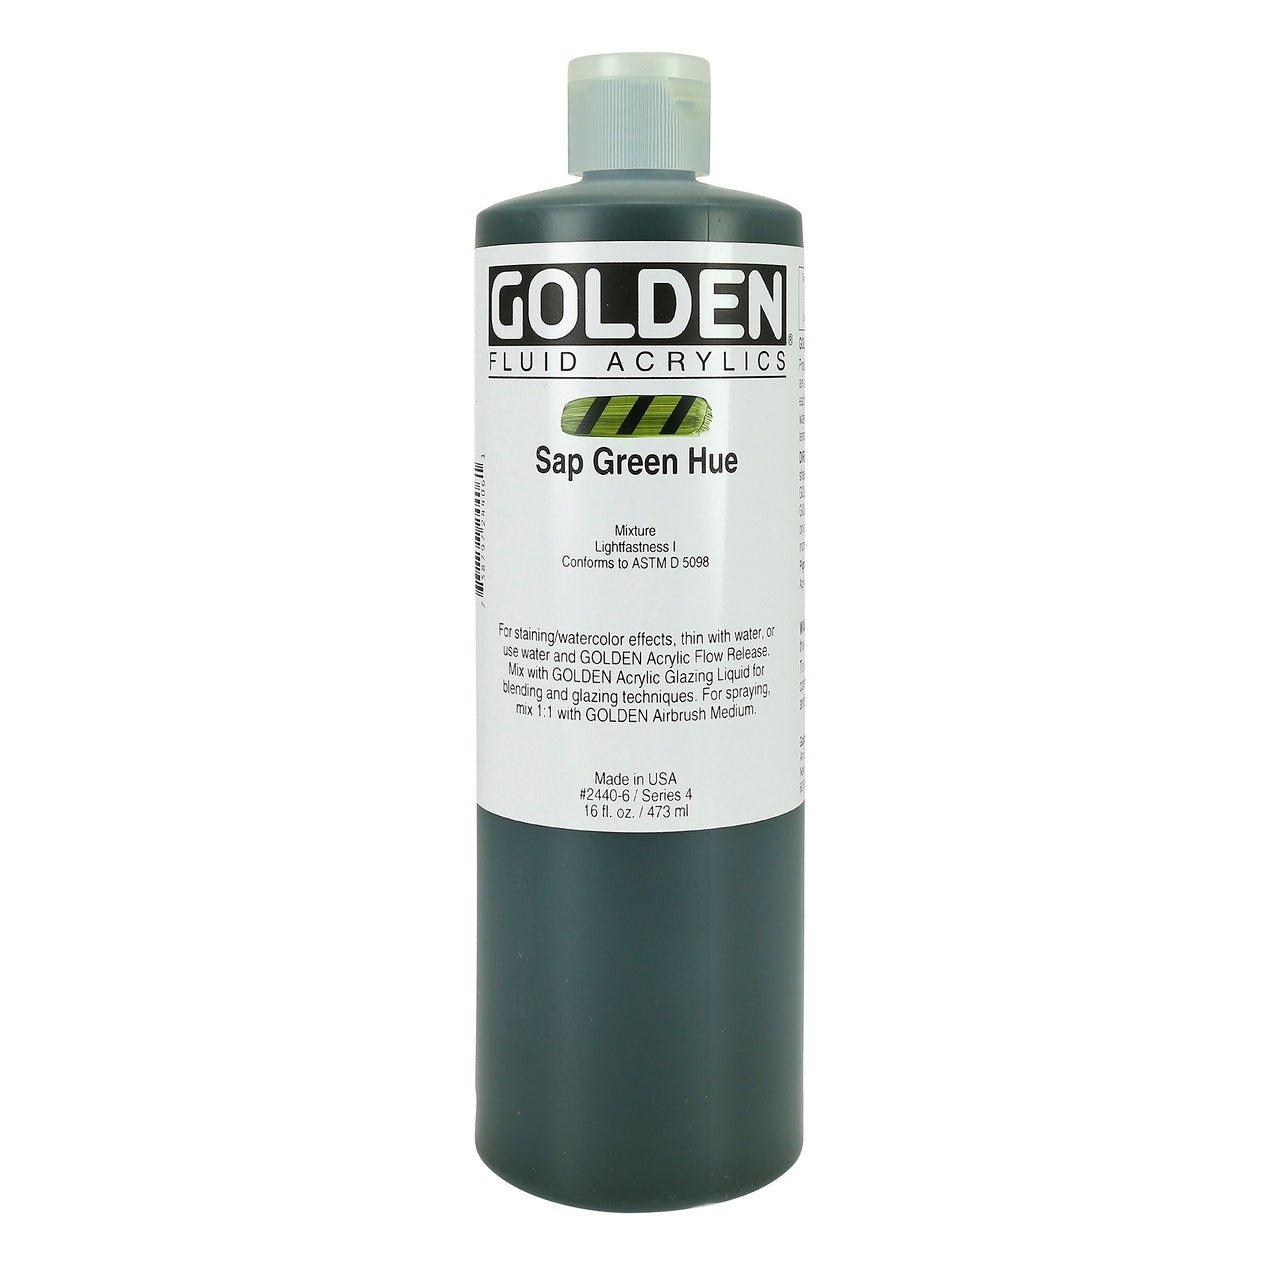 Golden Fluid Acrylic Sap Green Hue 16 oz - merriartist.com